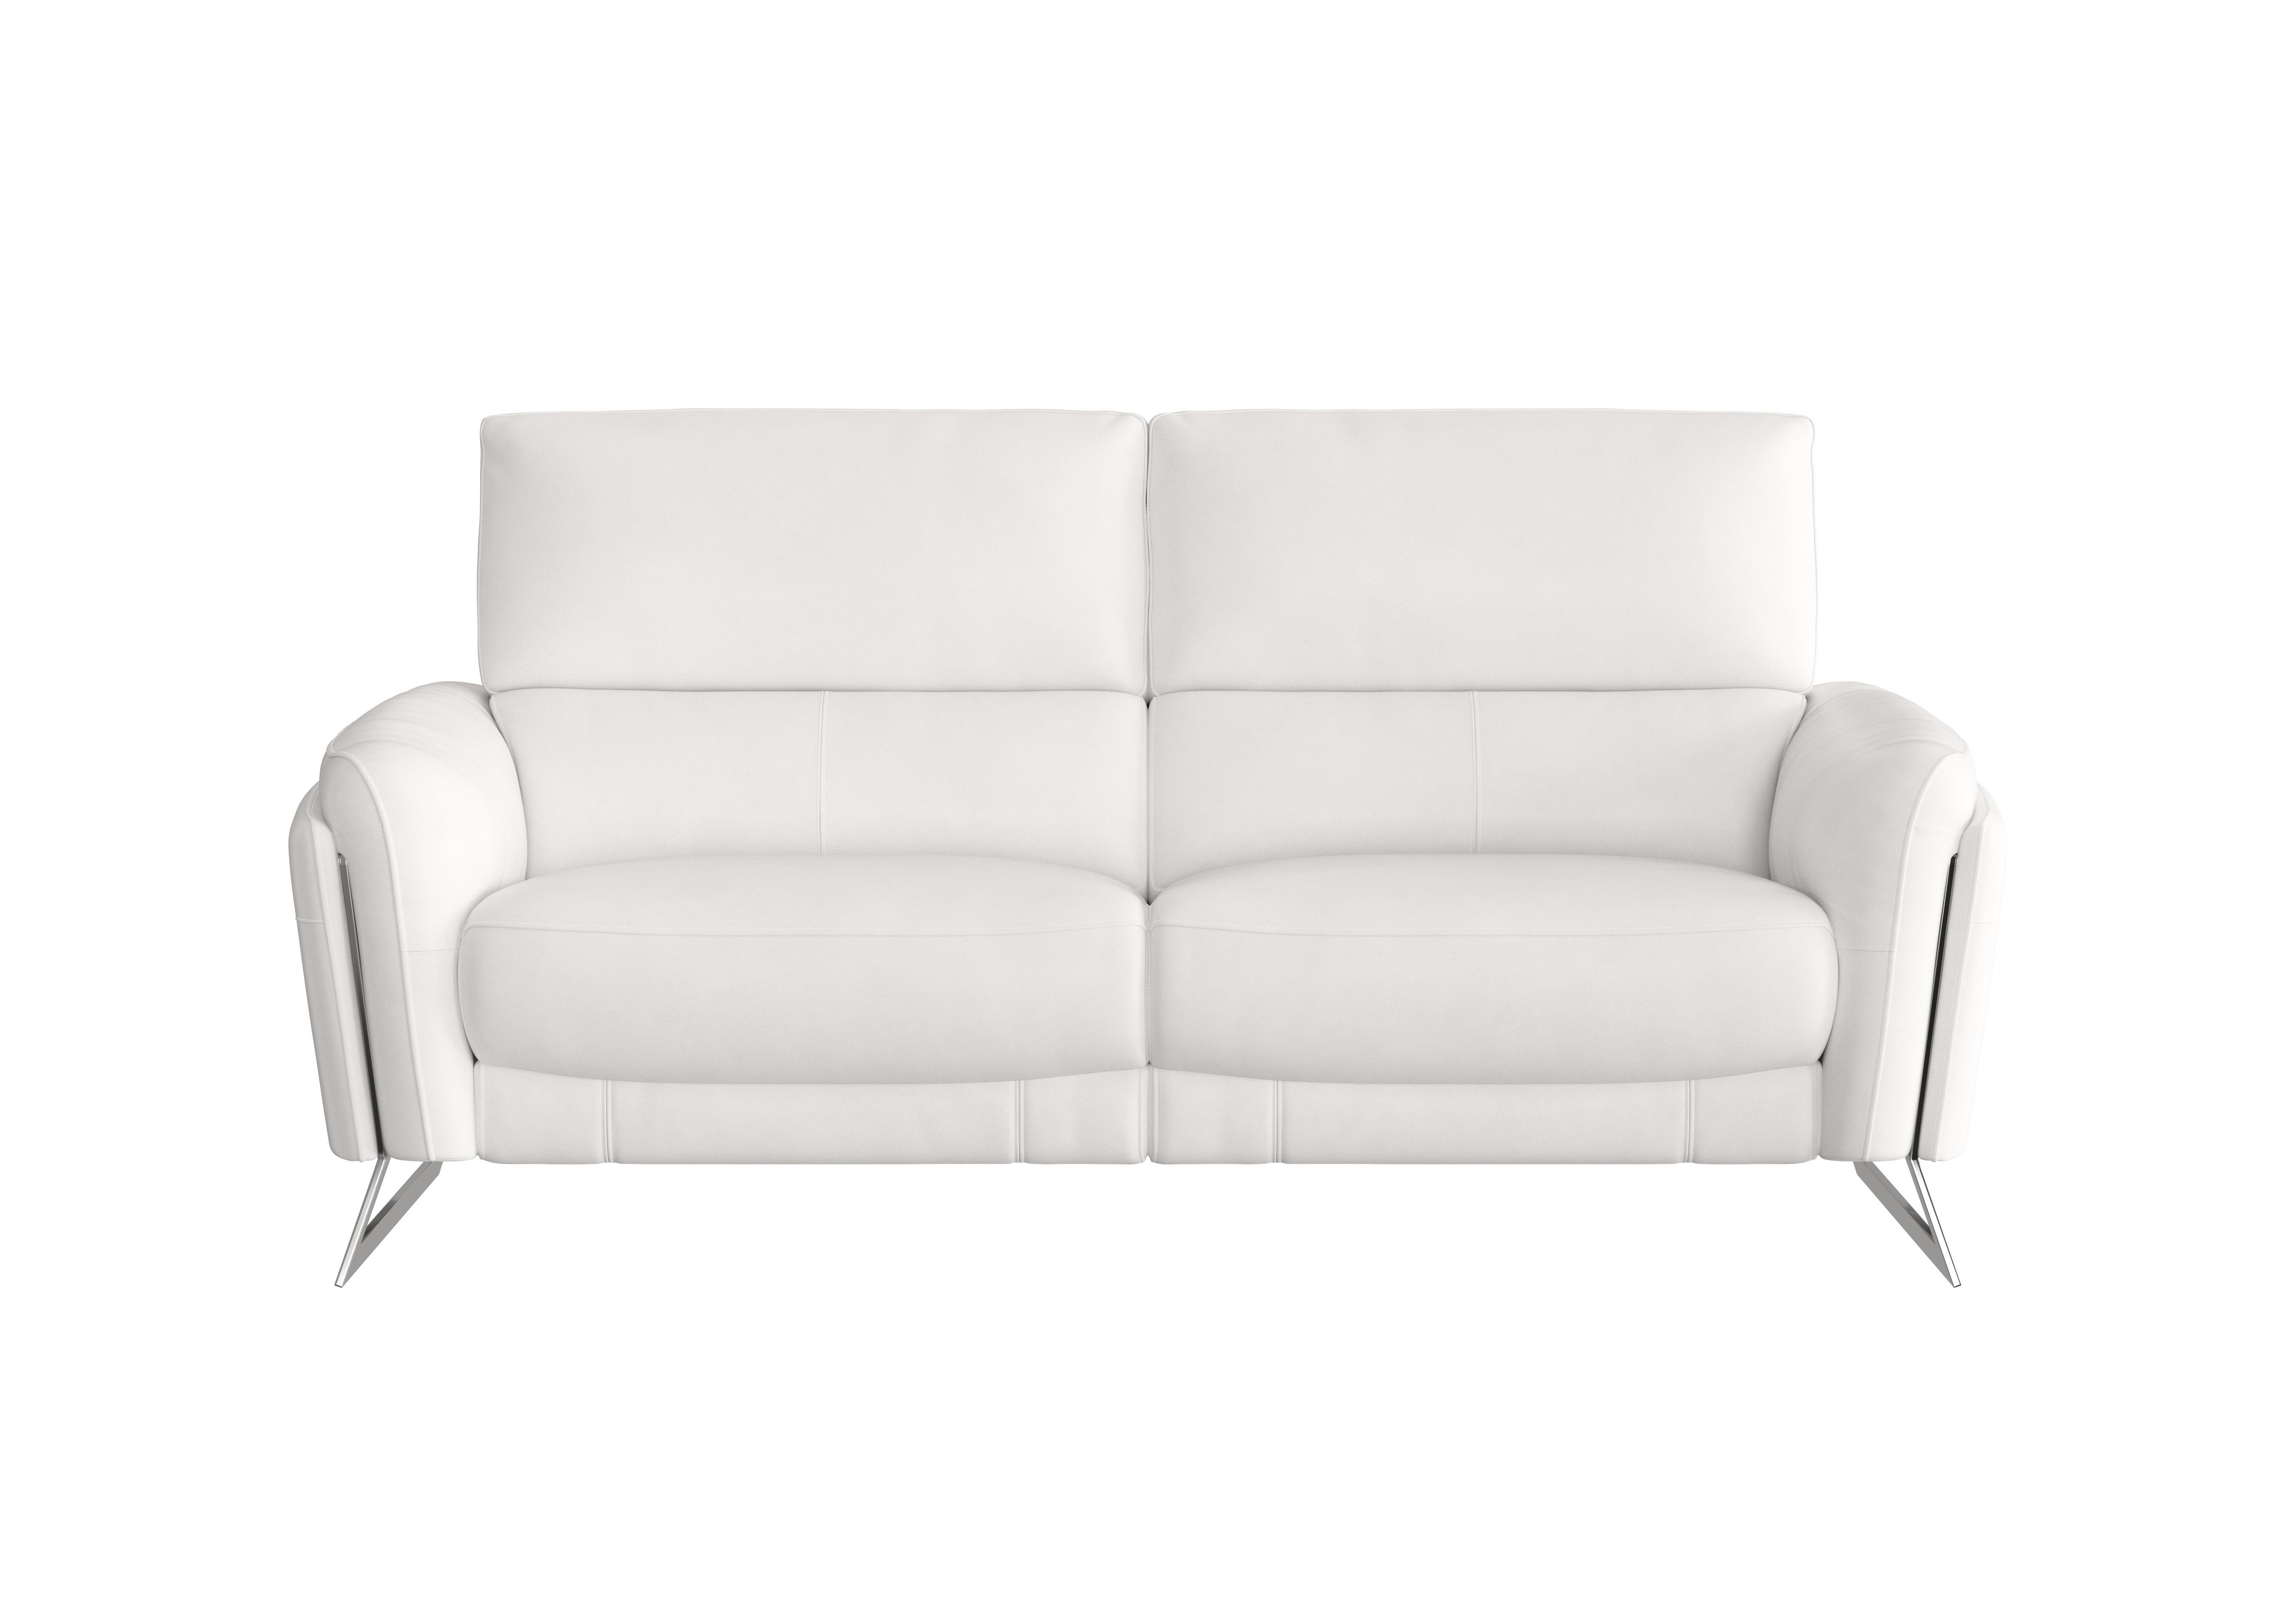 Amarilla 3 Seater Leather Sofa in Bv-744d Star White on Furniture Village